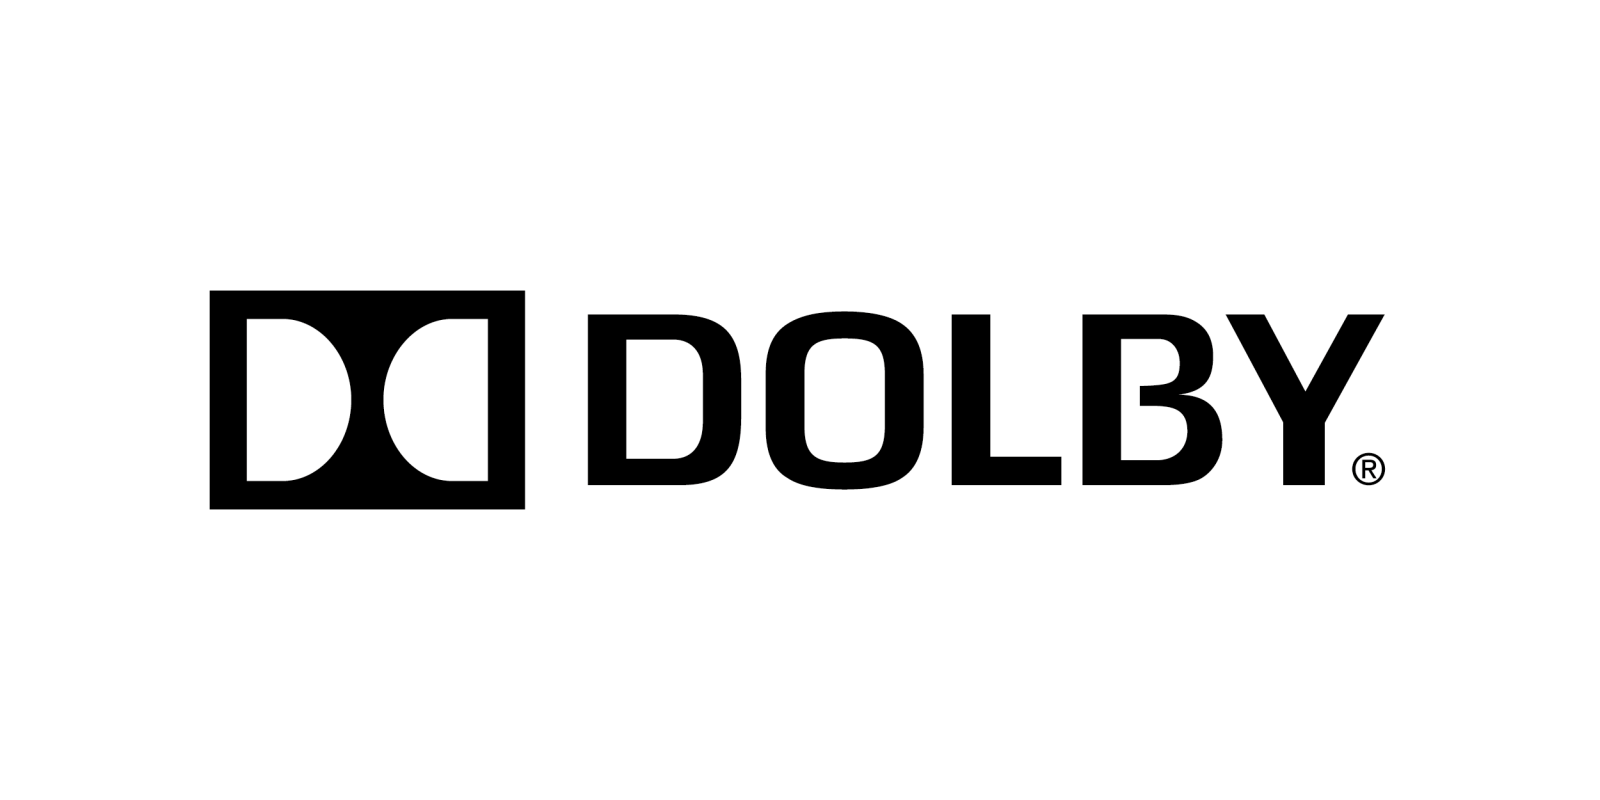 Dolby